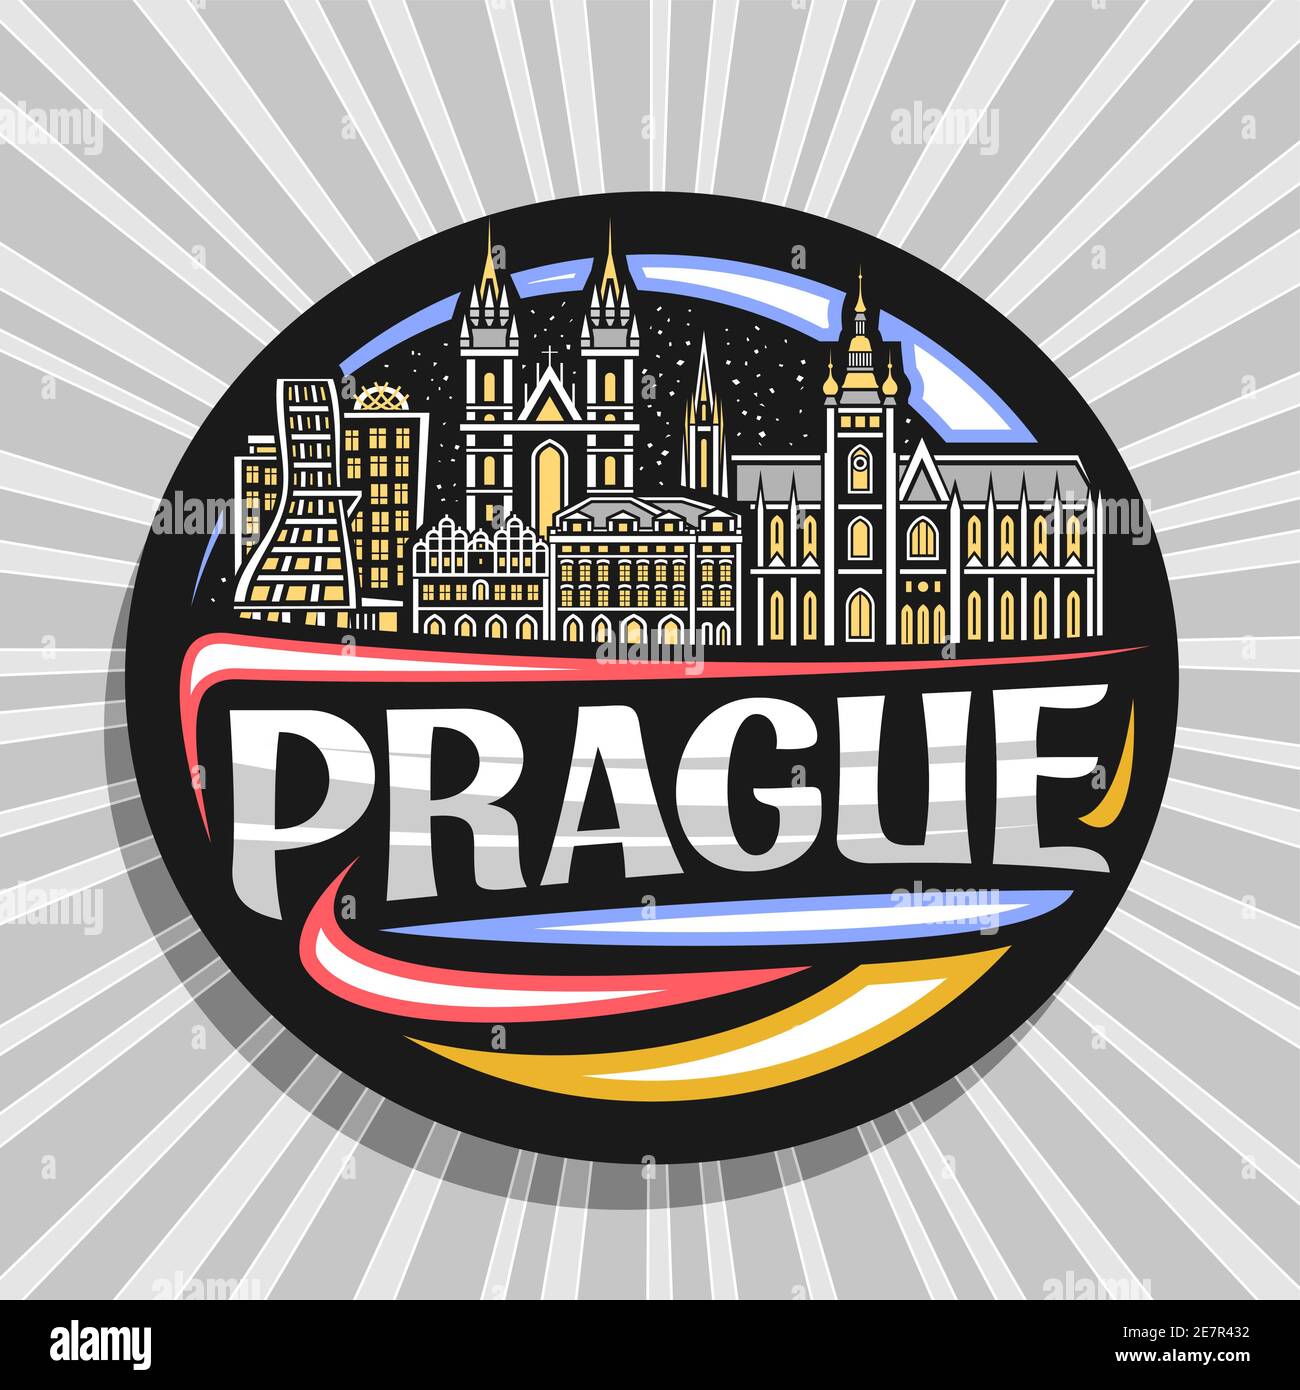 Vector logo for Prague, black decorative badge with outline illustration of historic prague city scape on dusk sky background, art design tourist frid Stock Vector